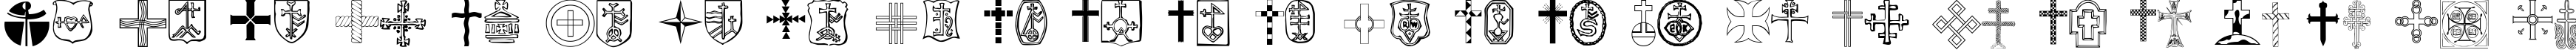 Пример написания английского алфавита шрифтом Christian Crosses IV